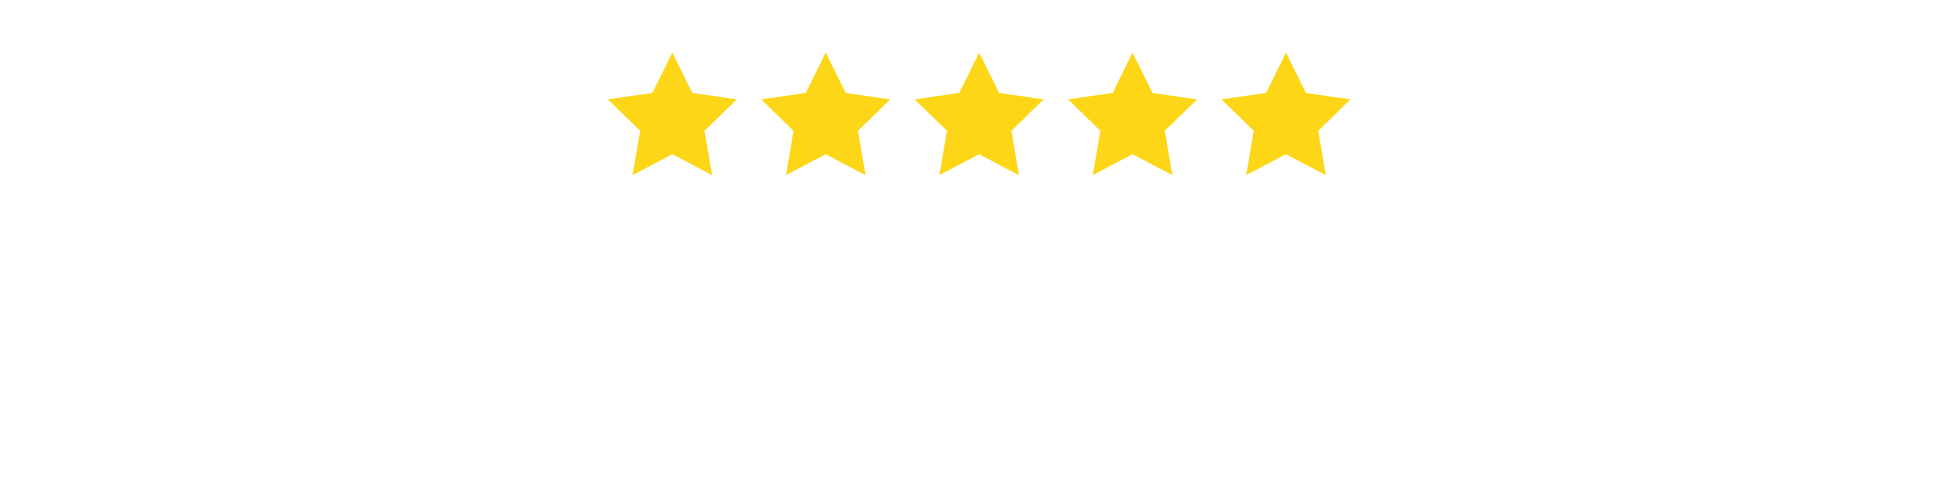 reviews-02.png